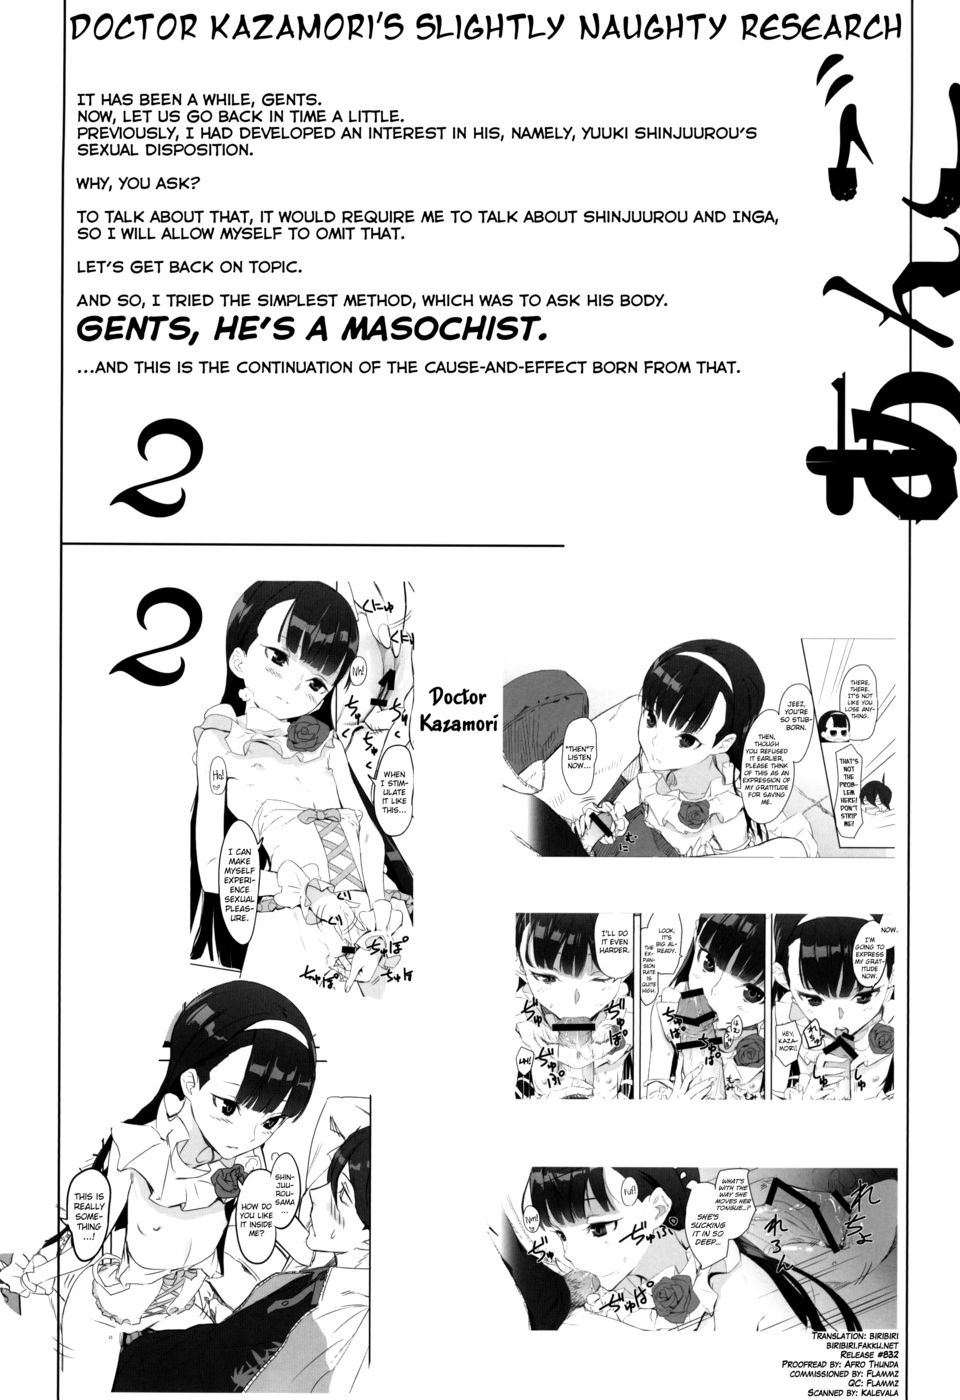 Hentai Manga Comic-Doctor Kazamori's Slightly Naughty Research-Read-2